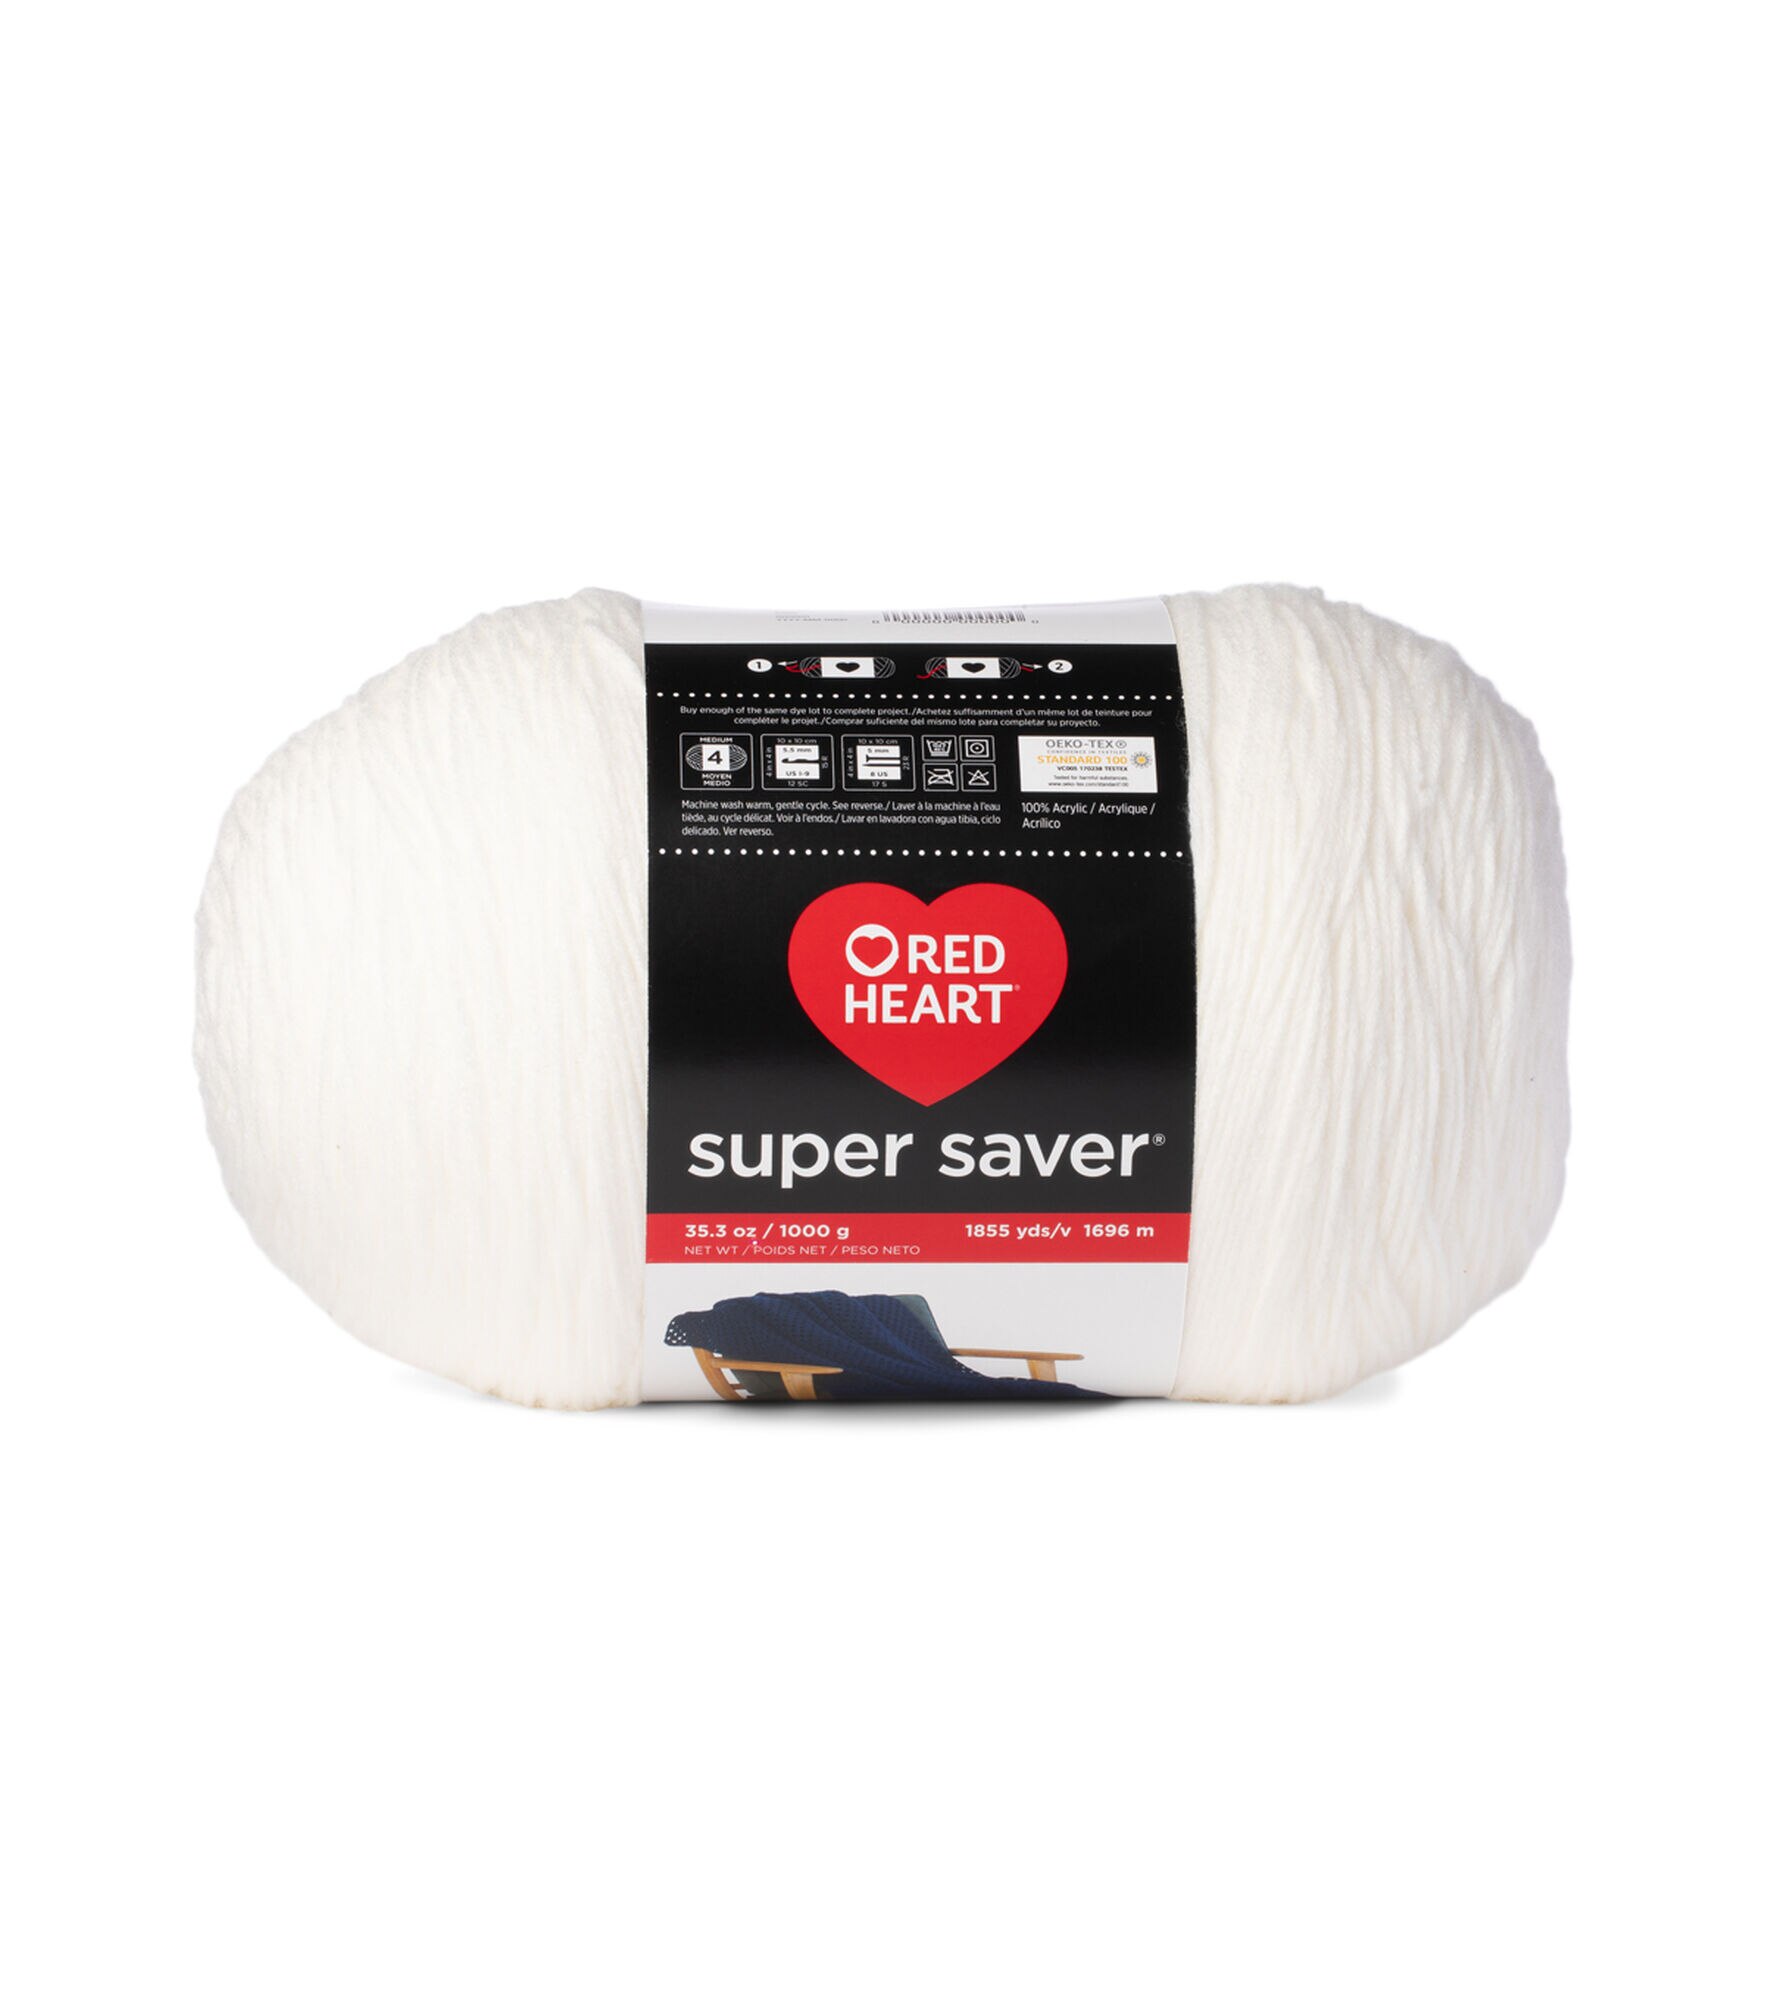 Red Heart Super Saver Jumbo Yarn 4 Bundle